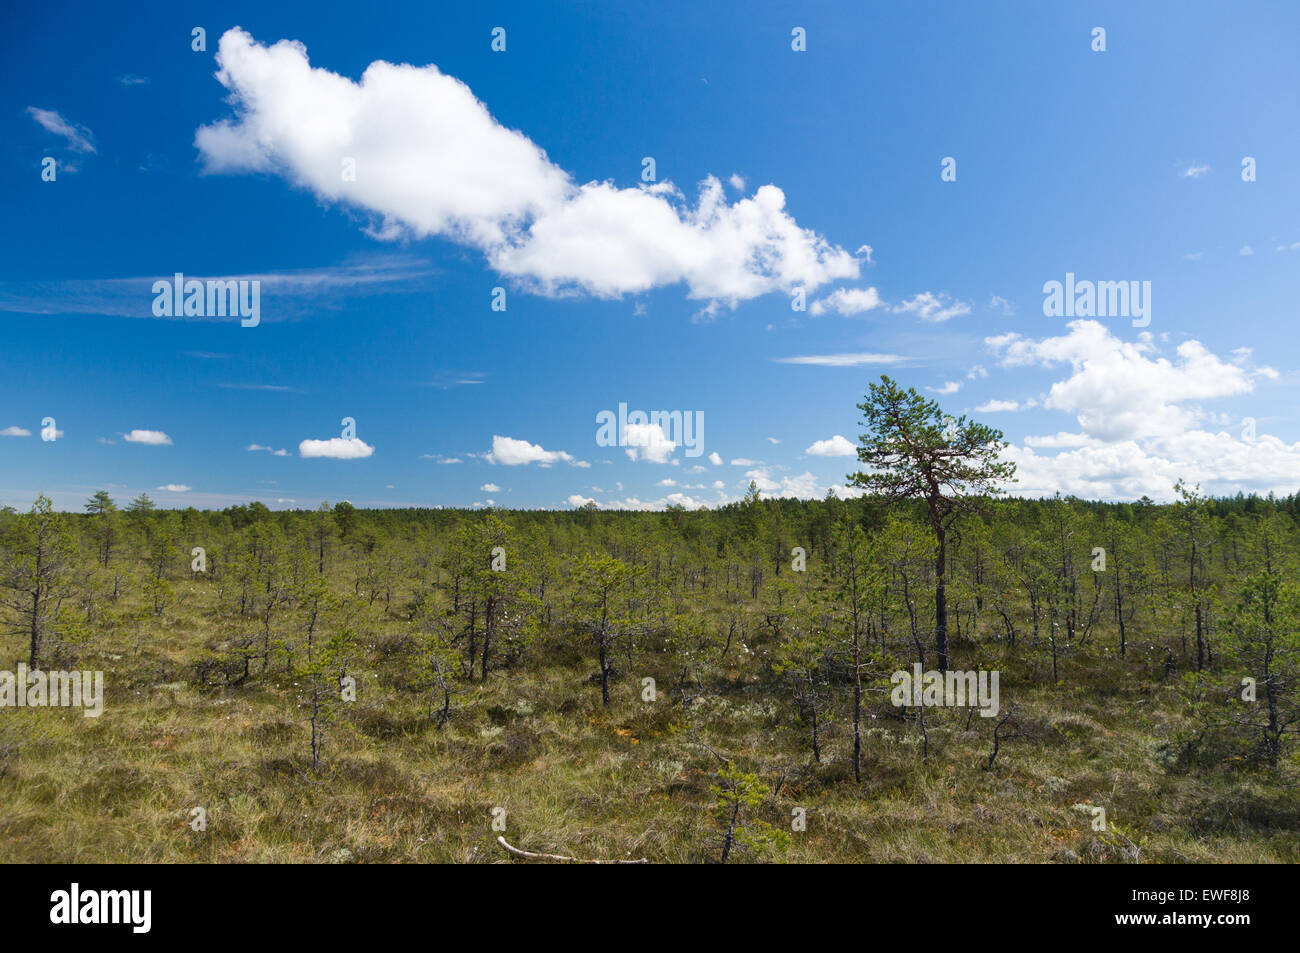 Viru bog reserve area under blue sky Stock Photo